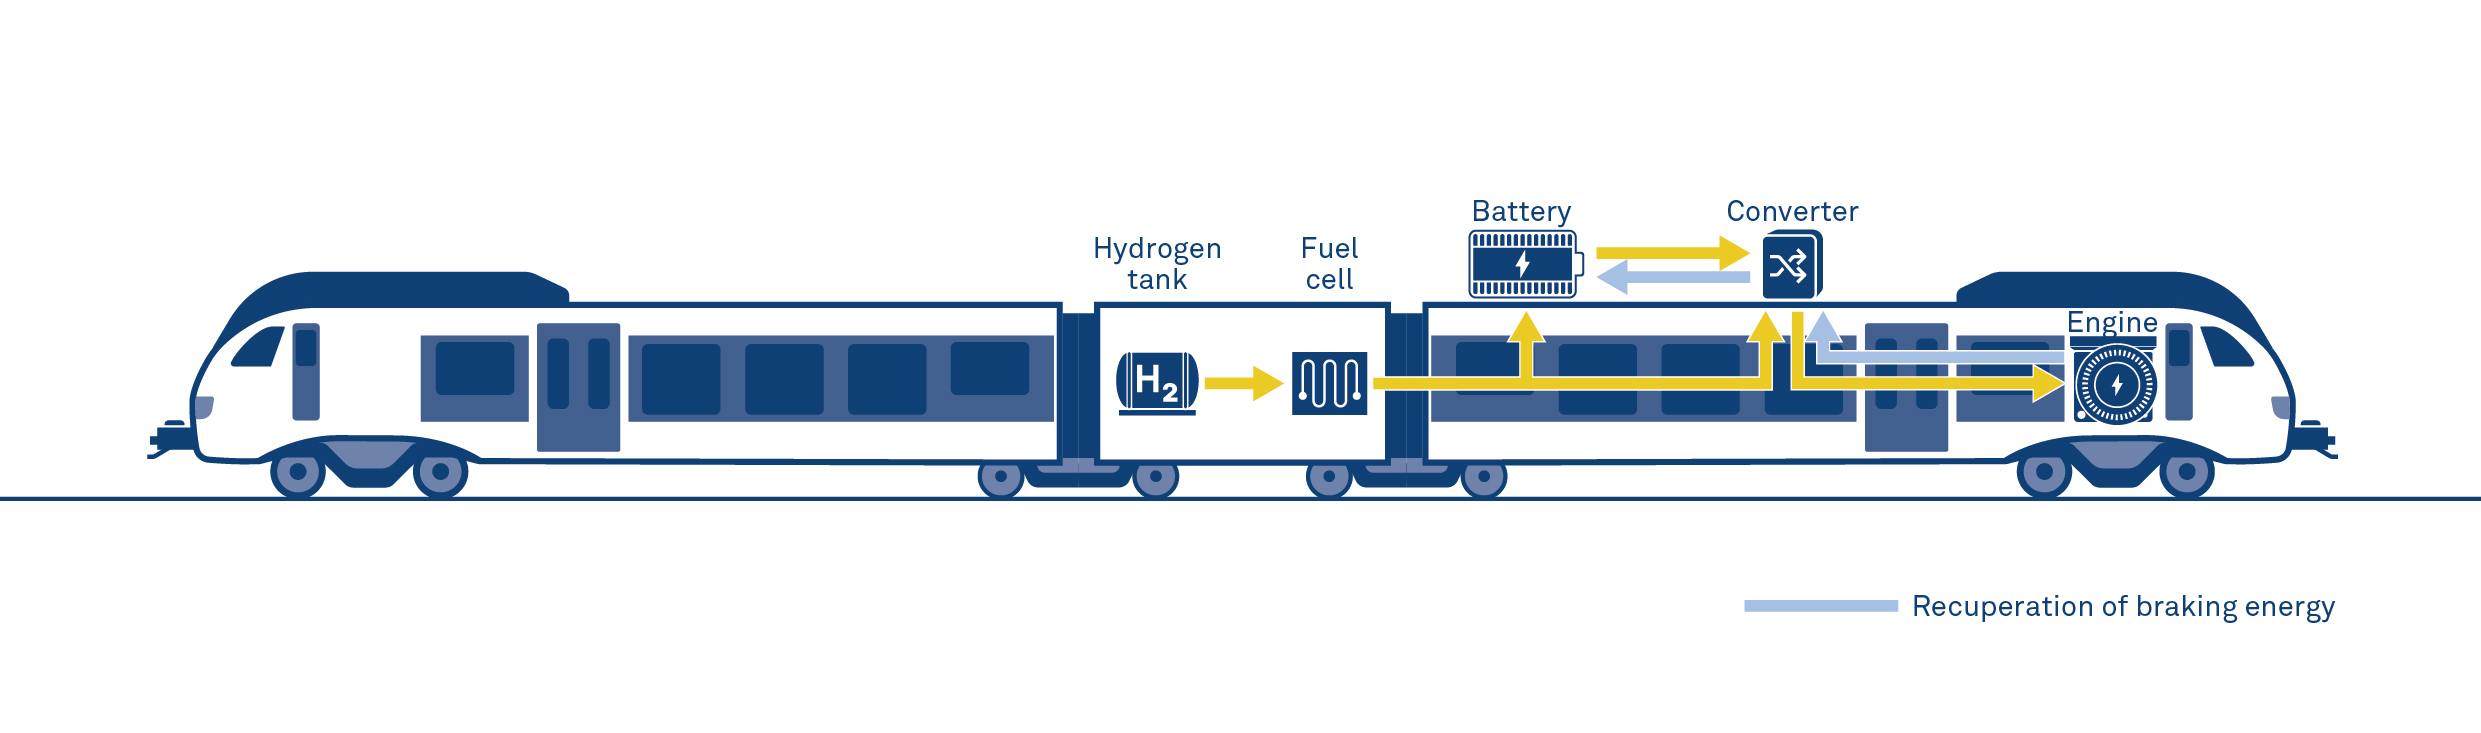 stadler flirt h2 hydrogen-powered train